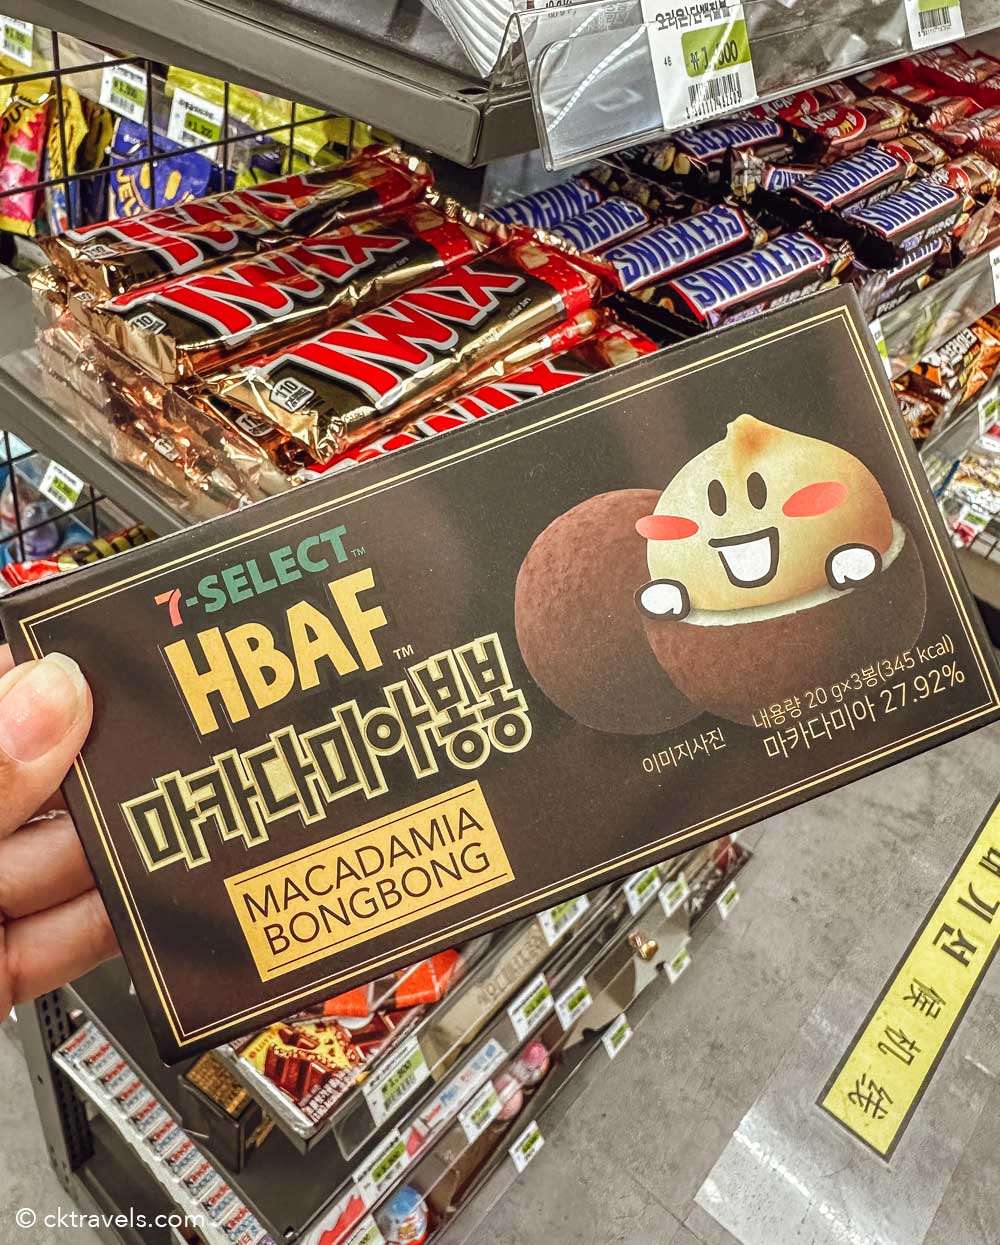 HBAF and 7-Eleven collaboration macadamia bongbong chocolate bar